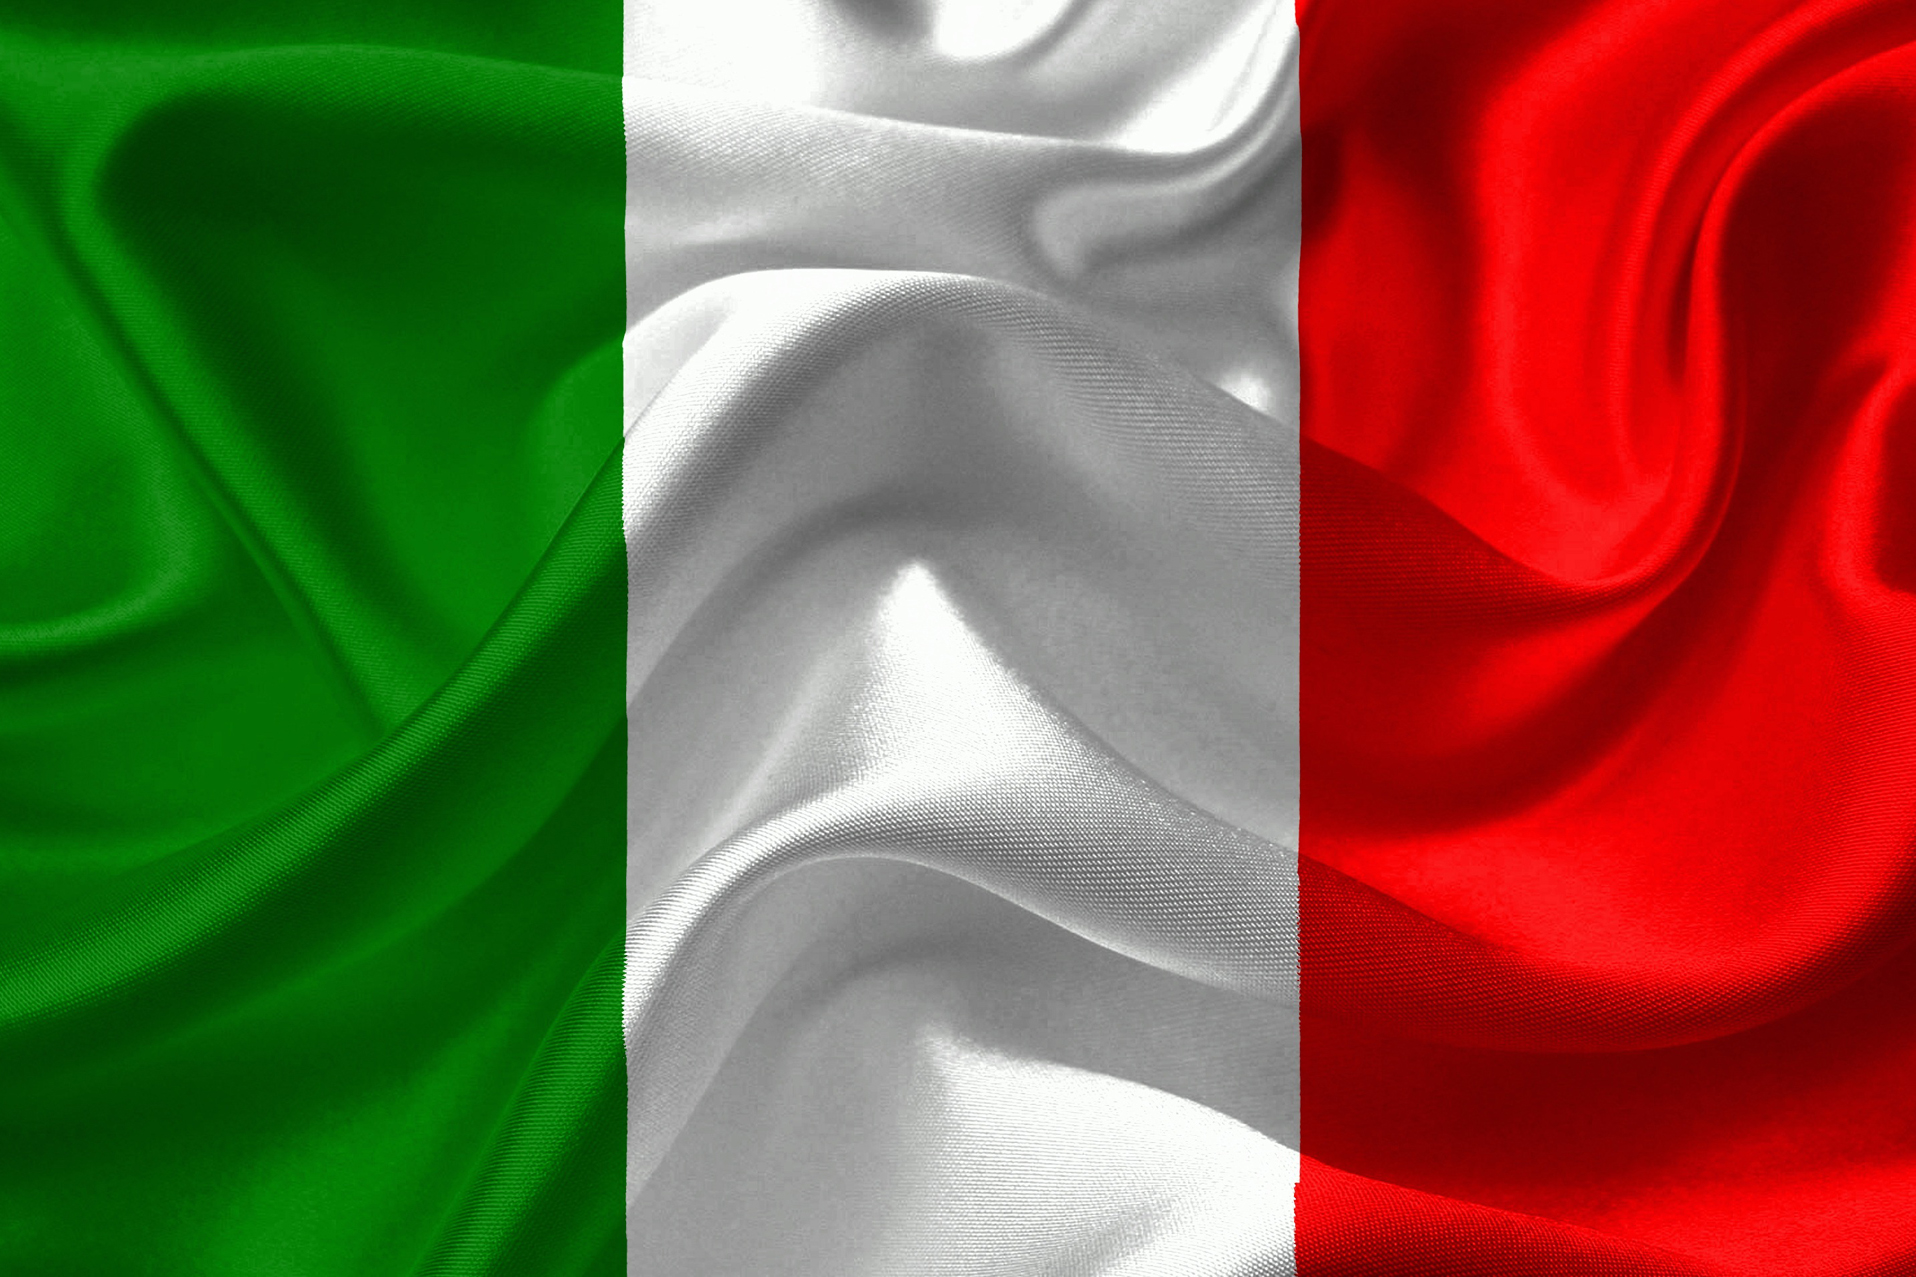 Italian_flag